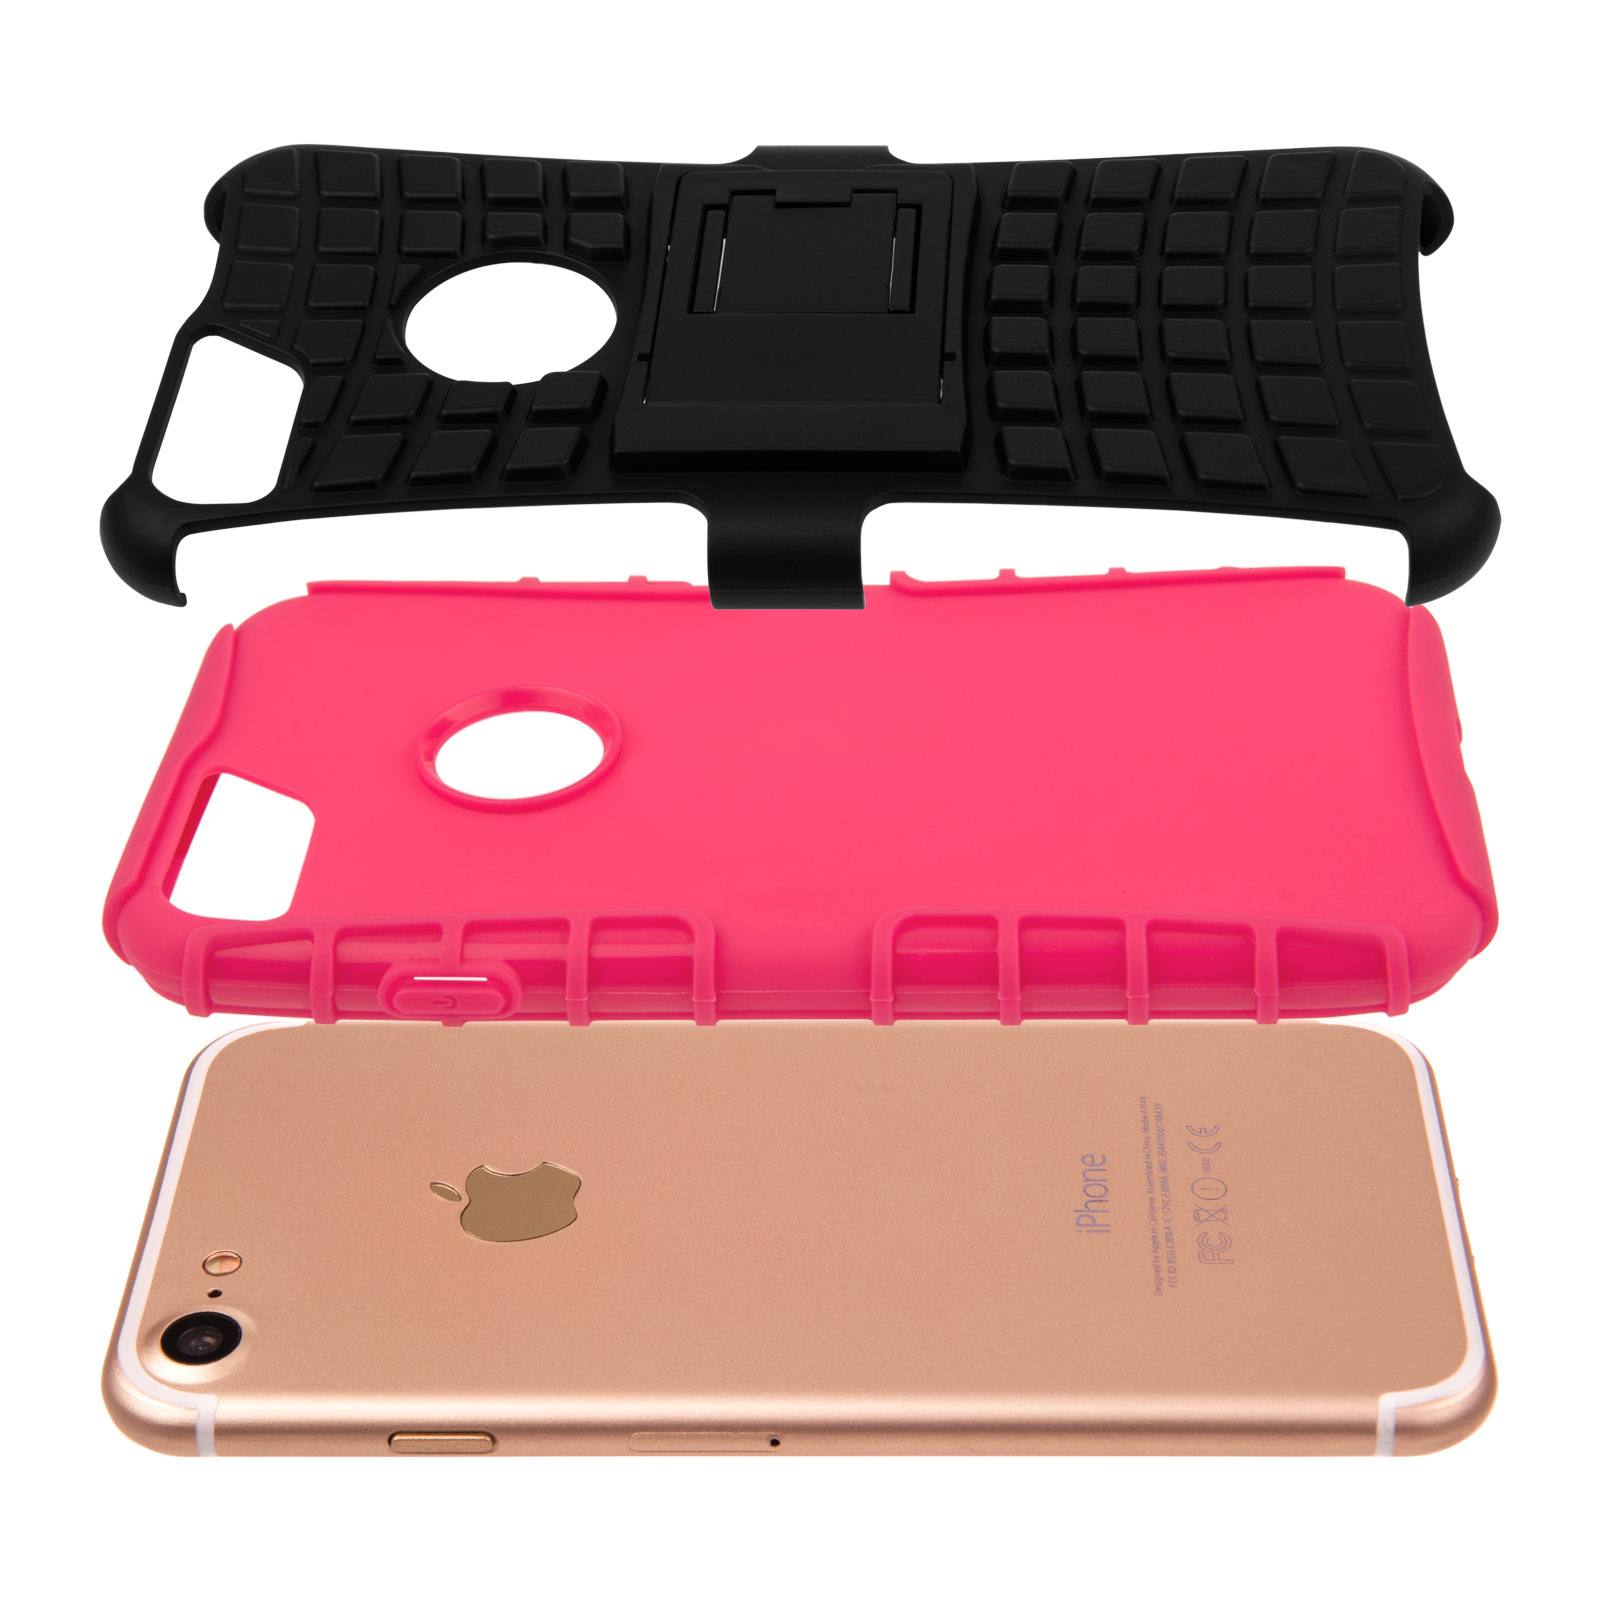 YouSave iPhone 7 Kickstand Combo Case - Hot Pink